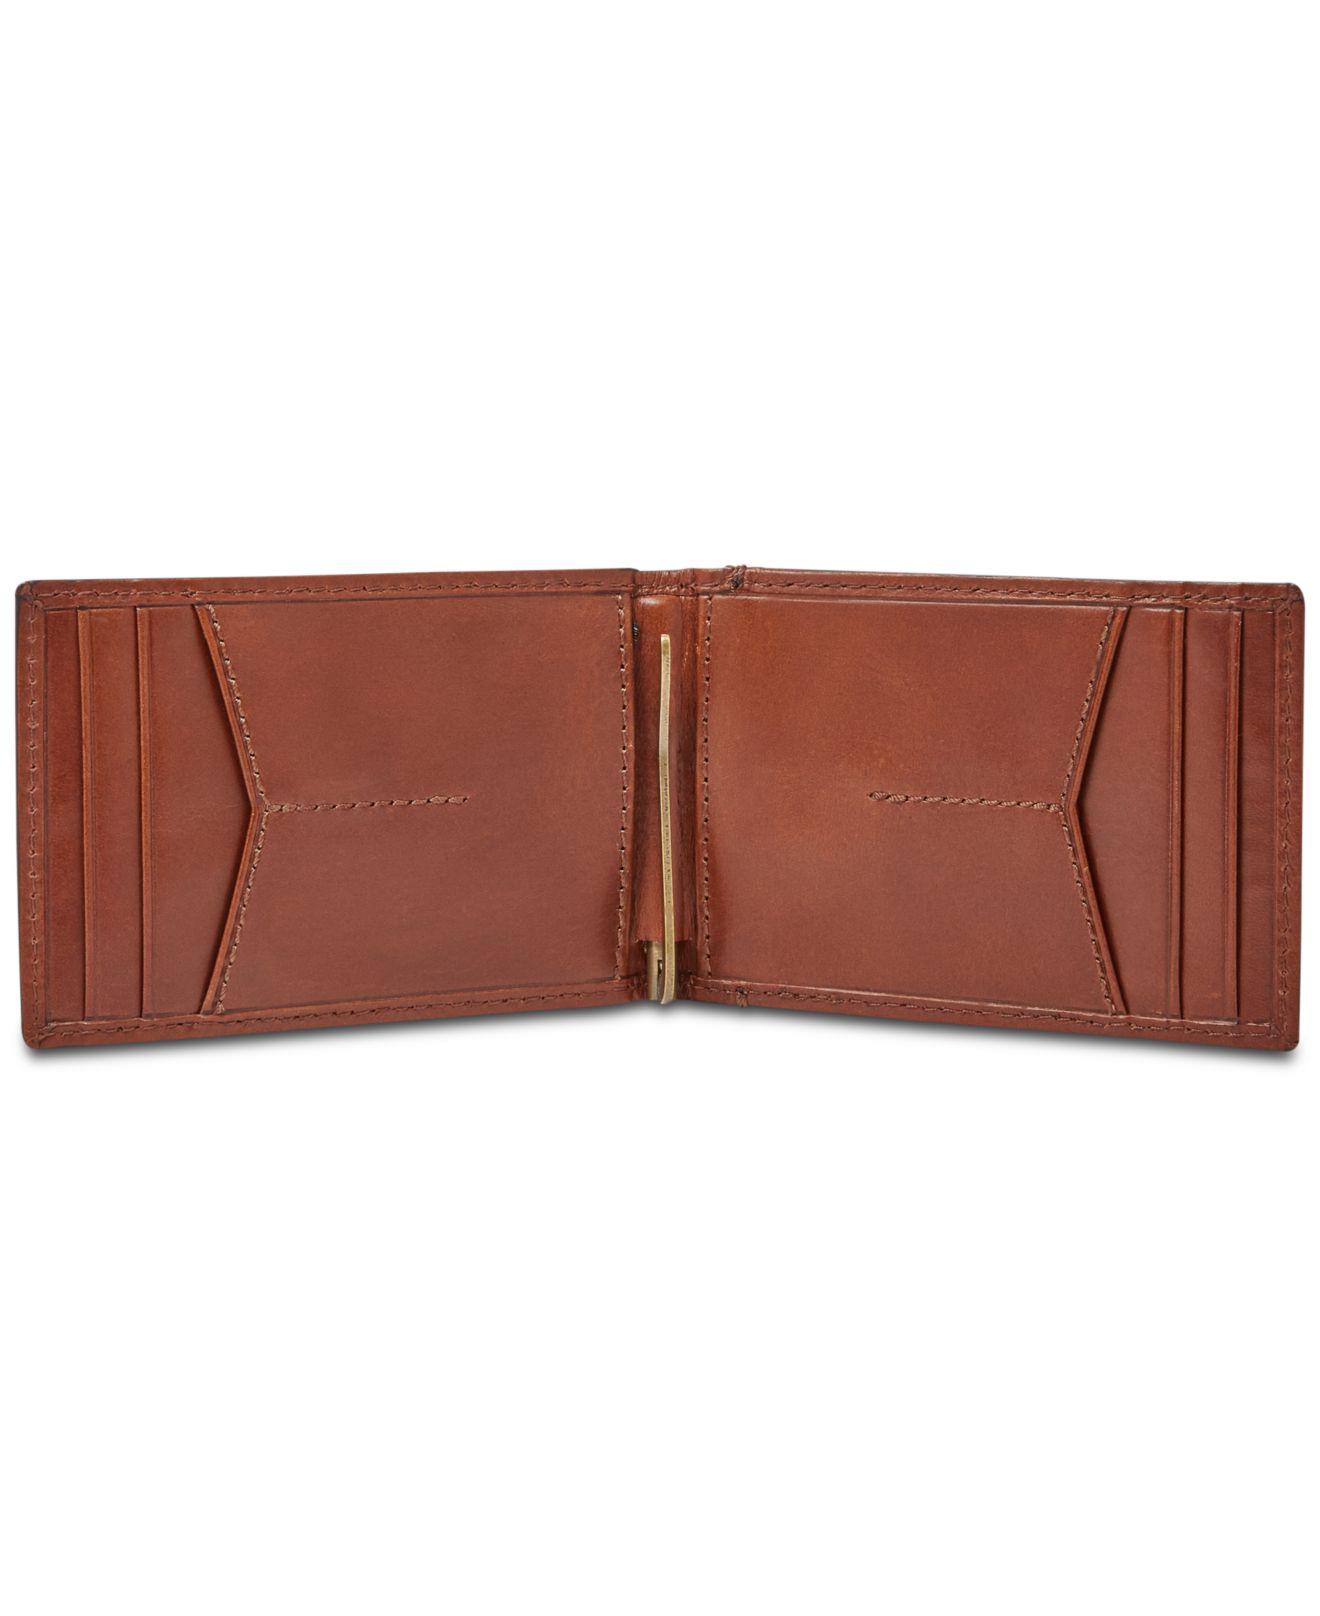 Fossil Leather Hugh Money Clip Bifold Wallet Cognac in Brown for Men - Lyst